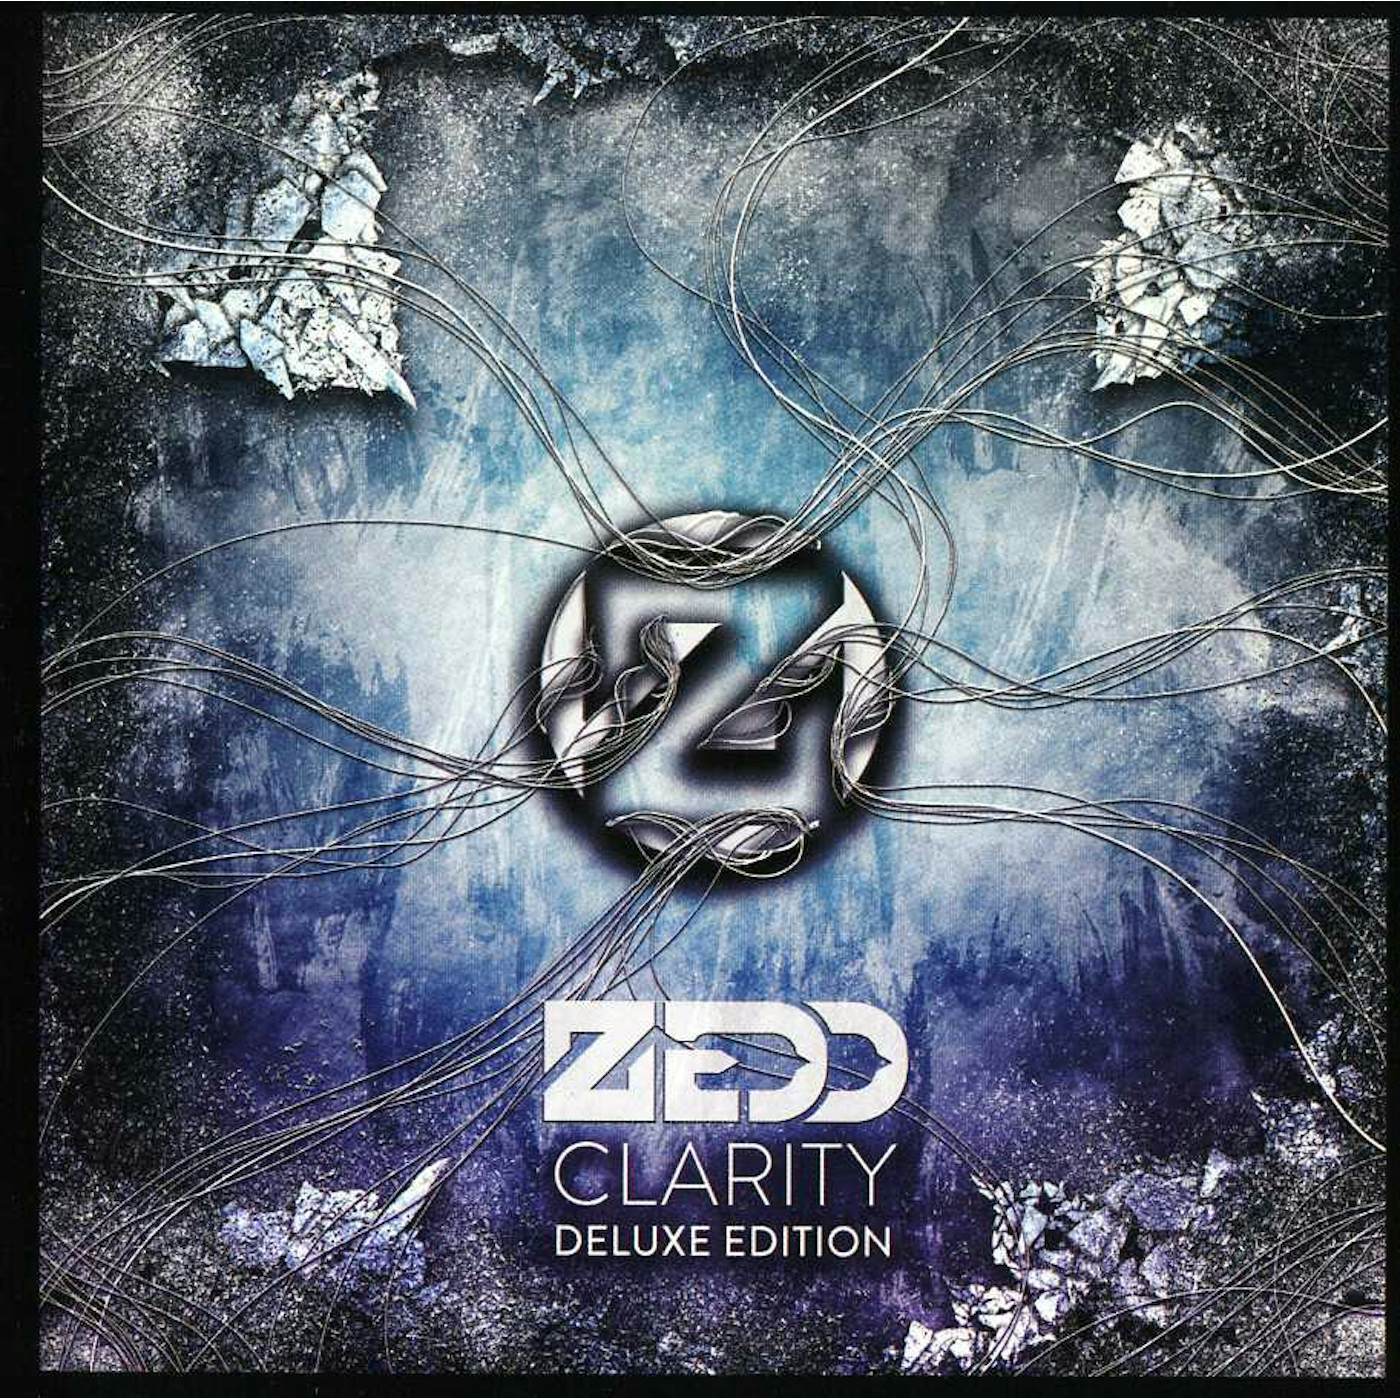 Zedd CLARITY CD